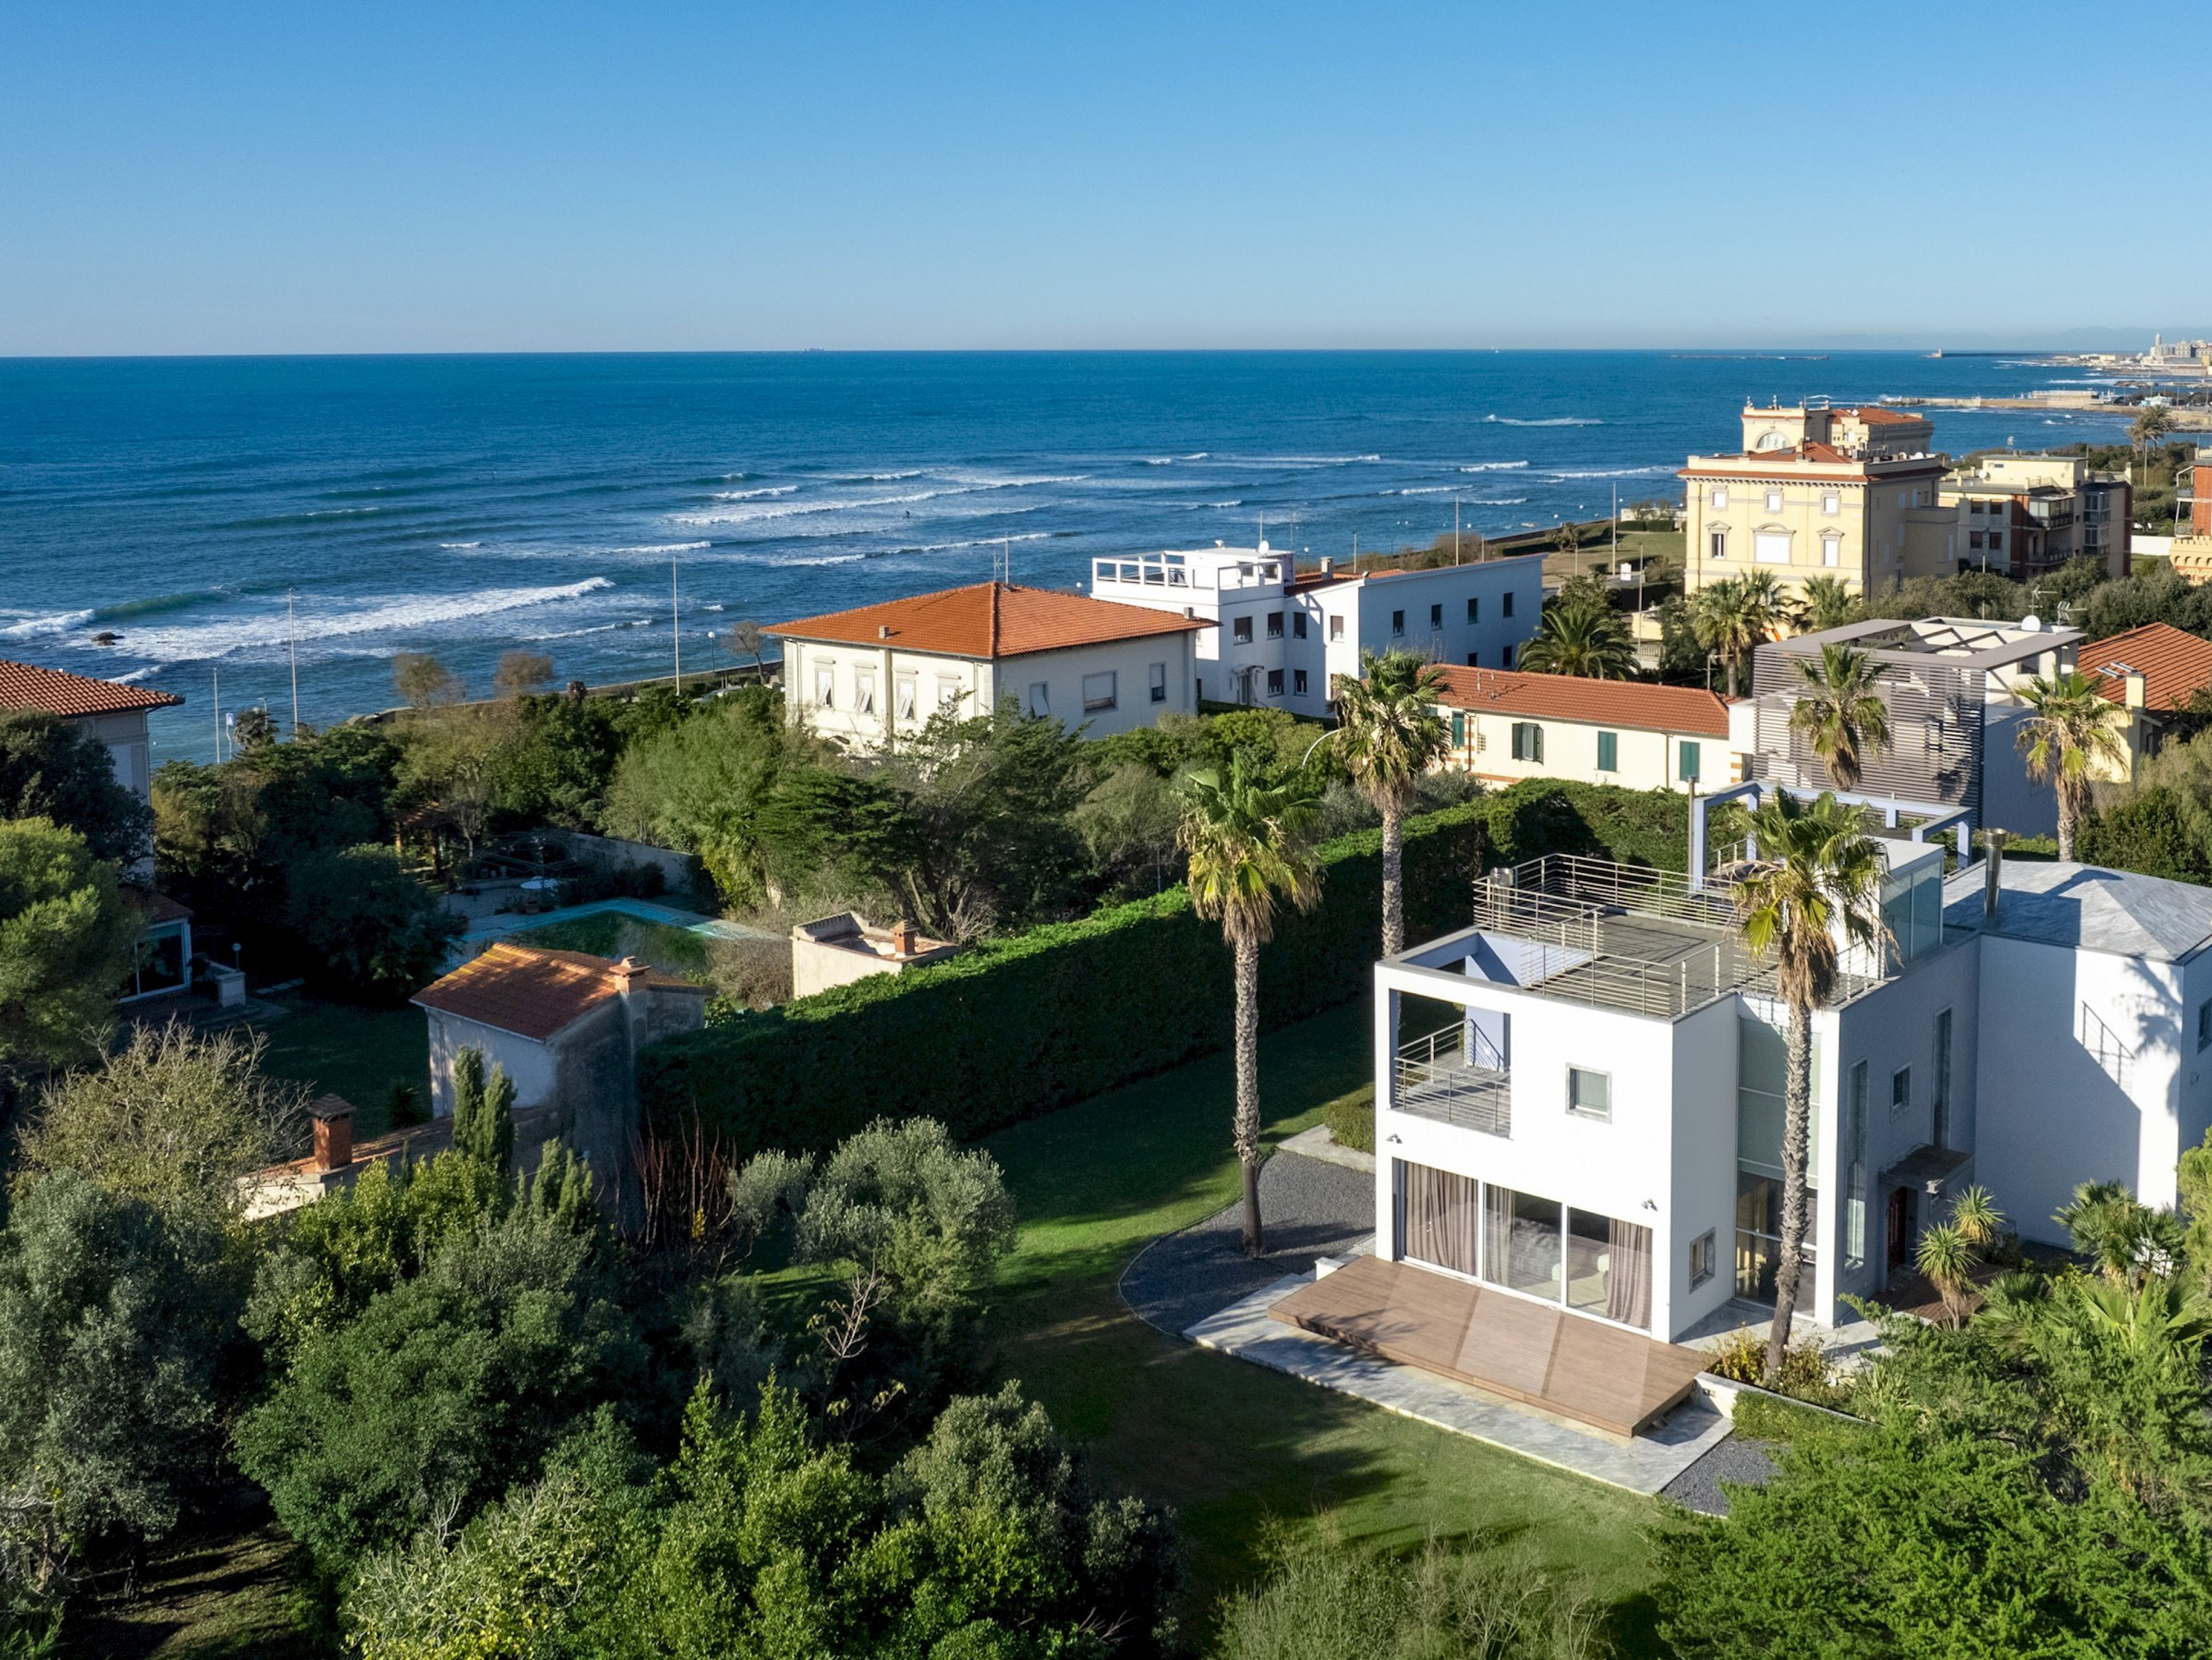 Villa Sabrina villas in Italy near the beach